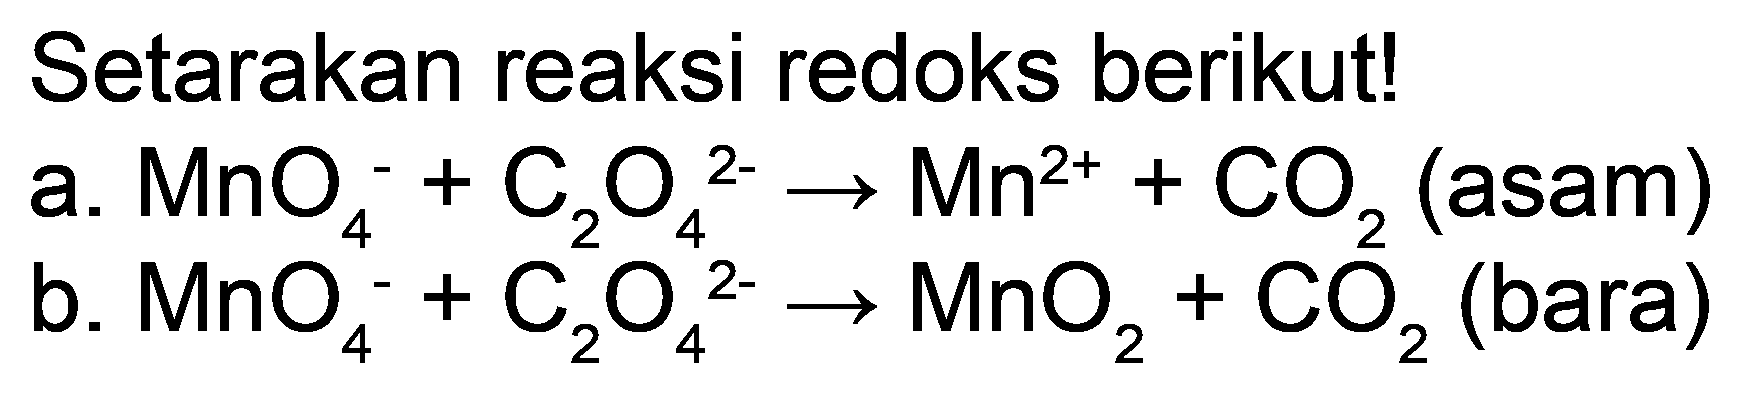 Setarakan reaksi redoks berikut!
a.  MnO_(4)^(-)+C_(2) O_(4)^(2-) -> Mn^(2+)+CO_(2)  (asam)
b.  MnO_(4)^(-)+C_(2) O_(4)^(2-) -> MnO_(2)+CO_(2)  (bara)